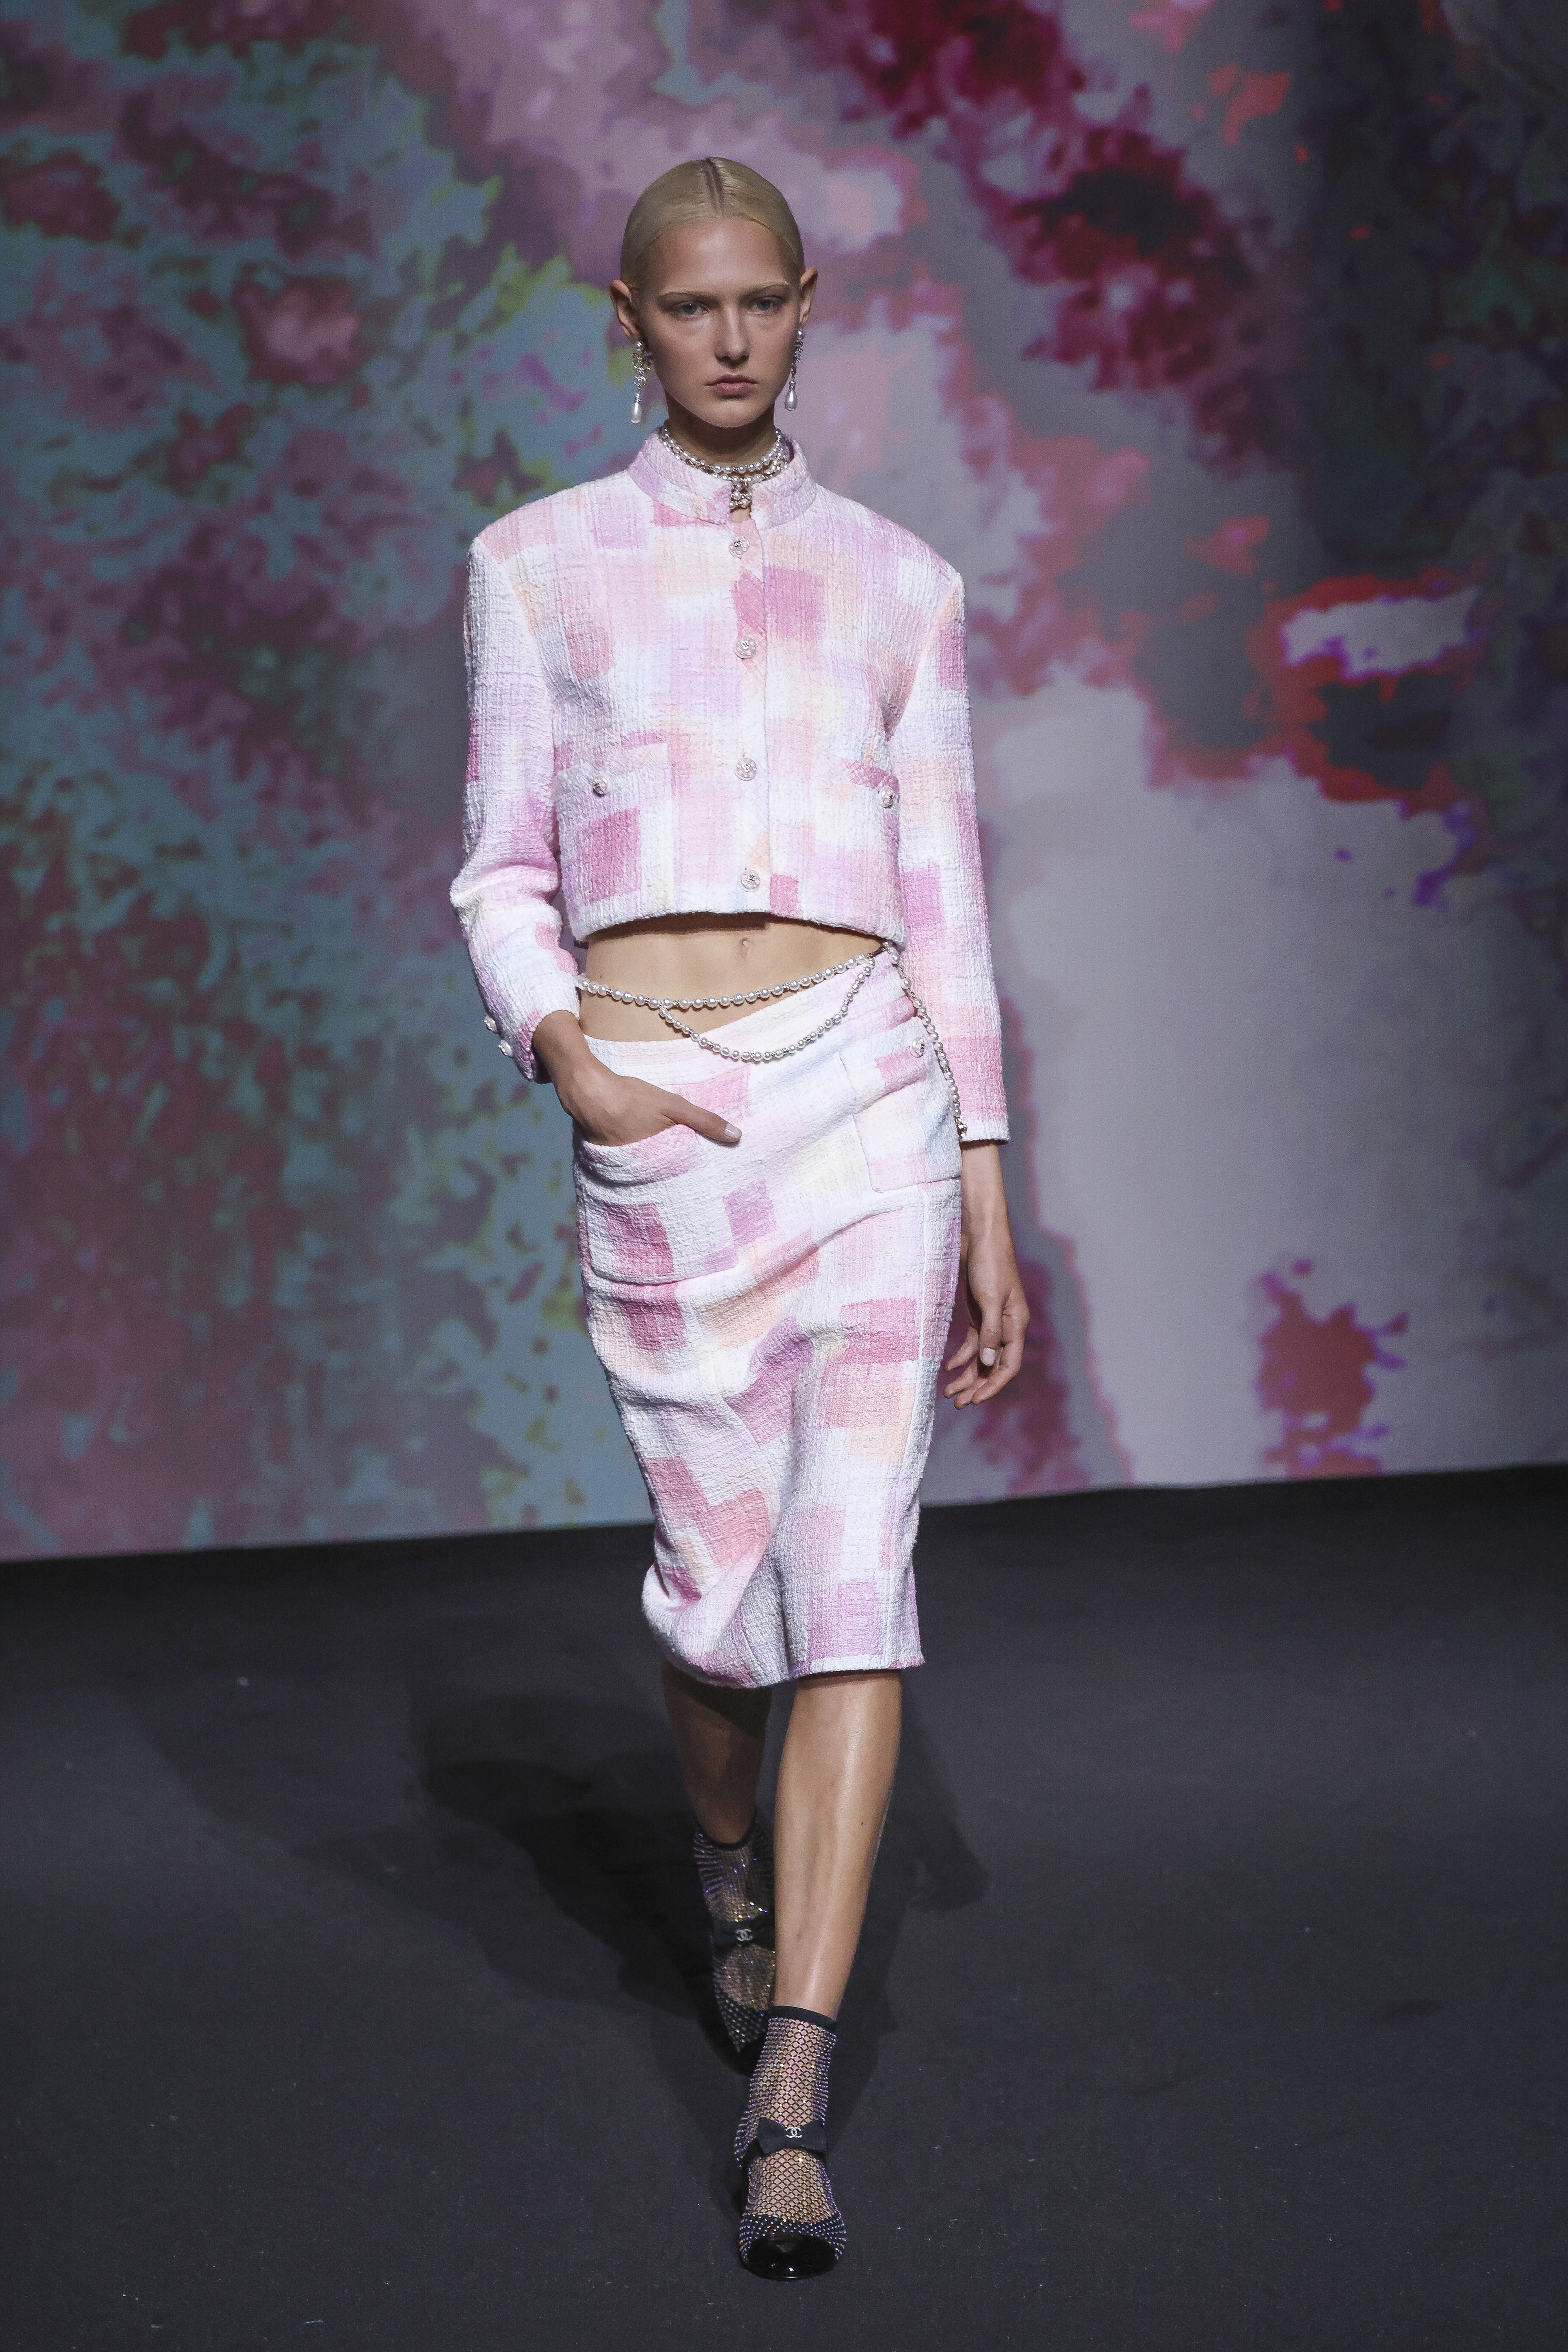 Louis Vuitton's 'blow up' show caps energetic fashion season - WTOP News